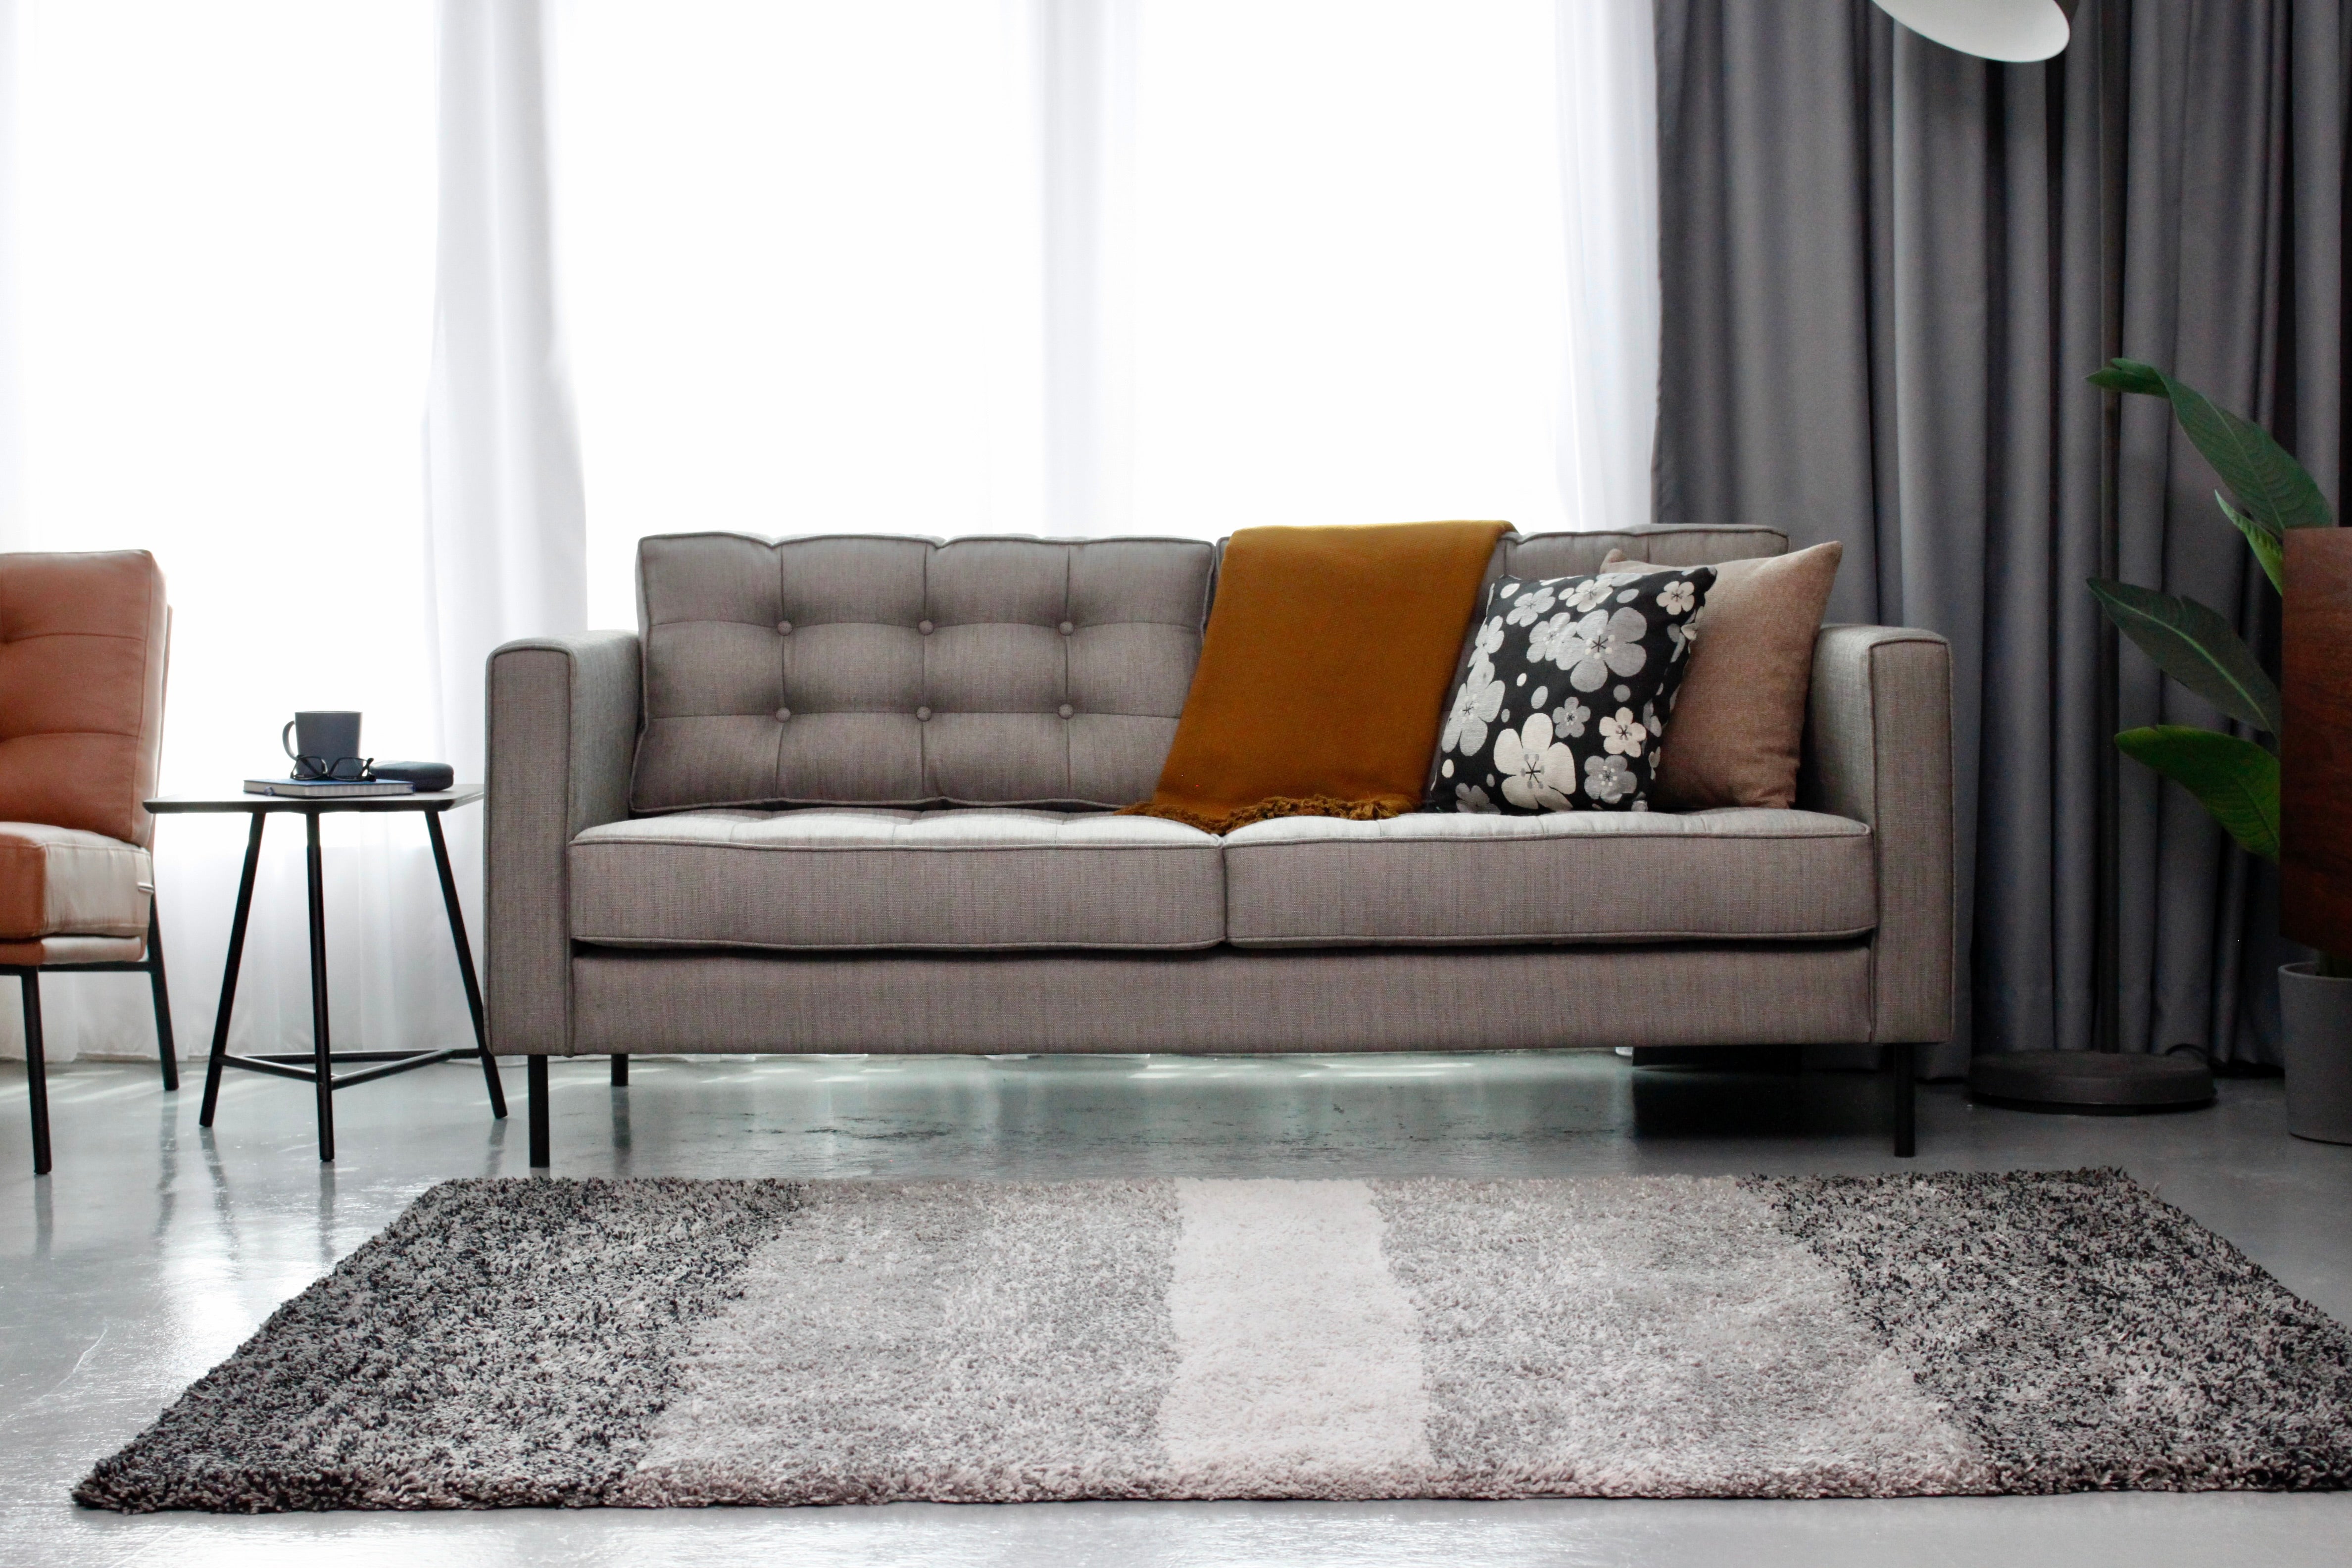 SATAH Sofa 2.1m Silver Grey ACACIA Fabric